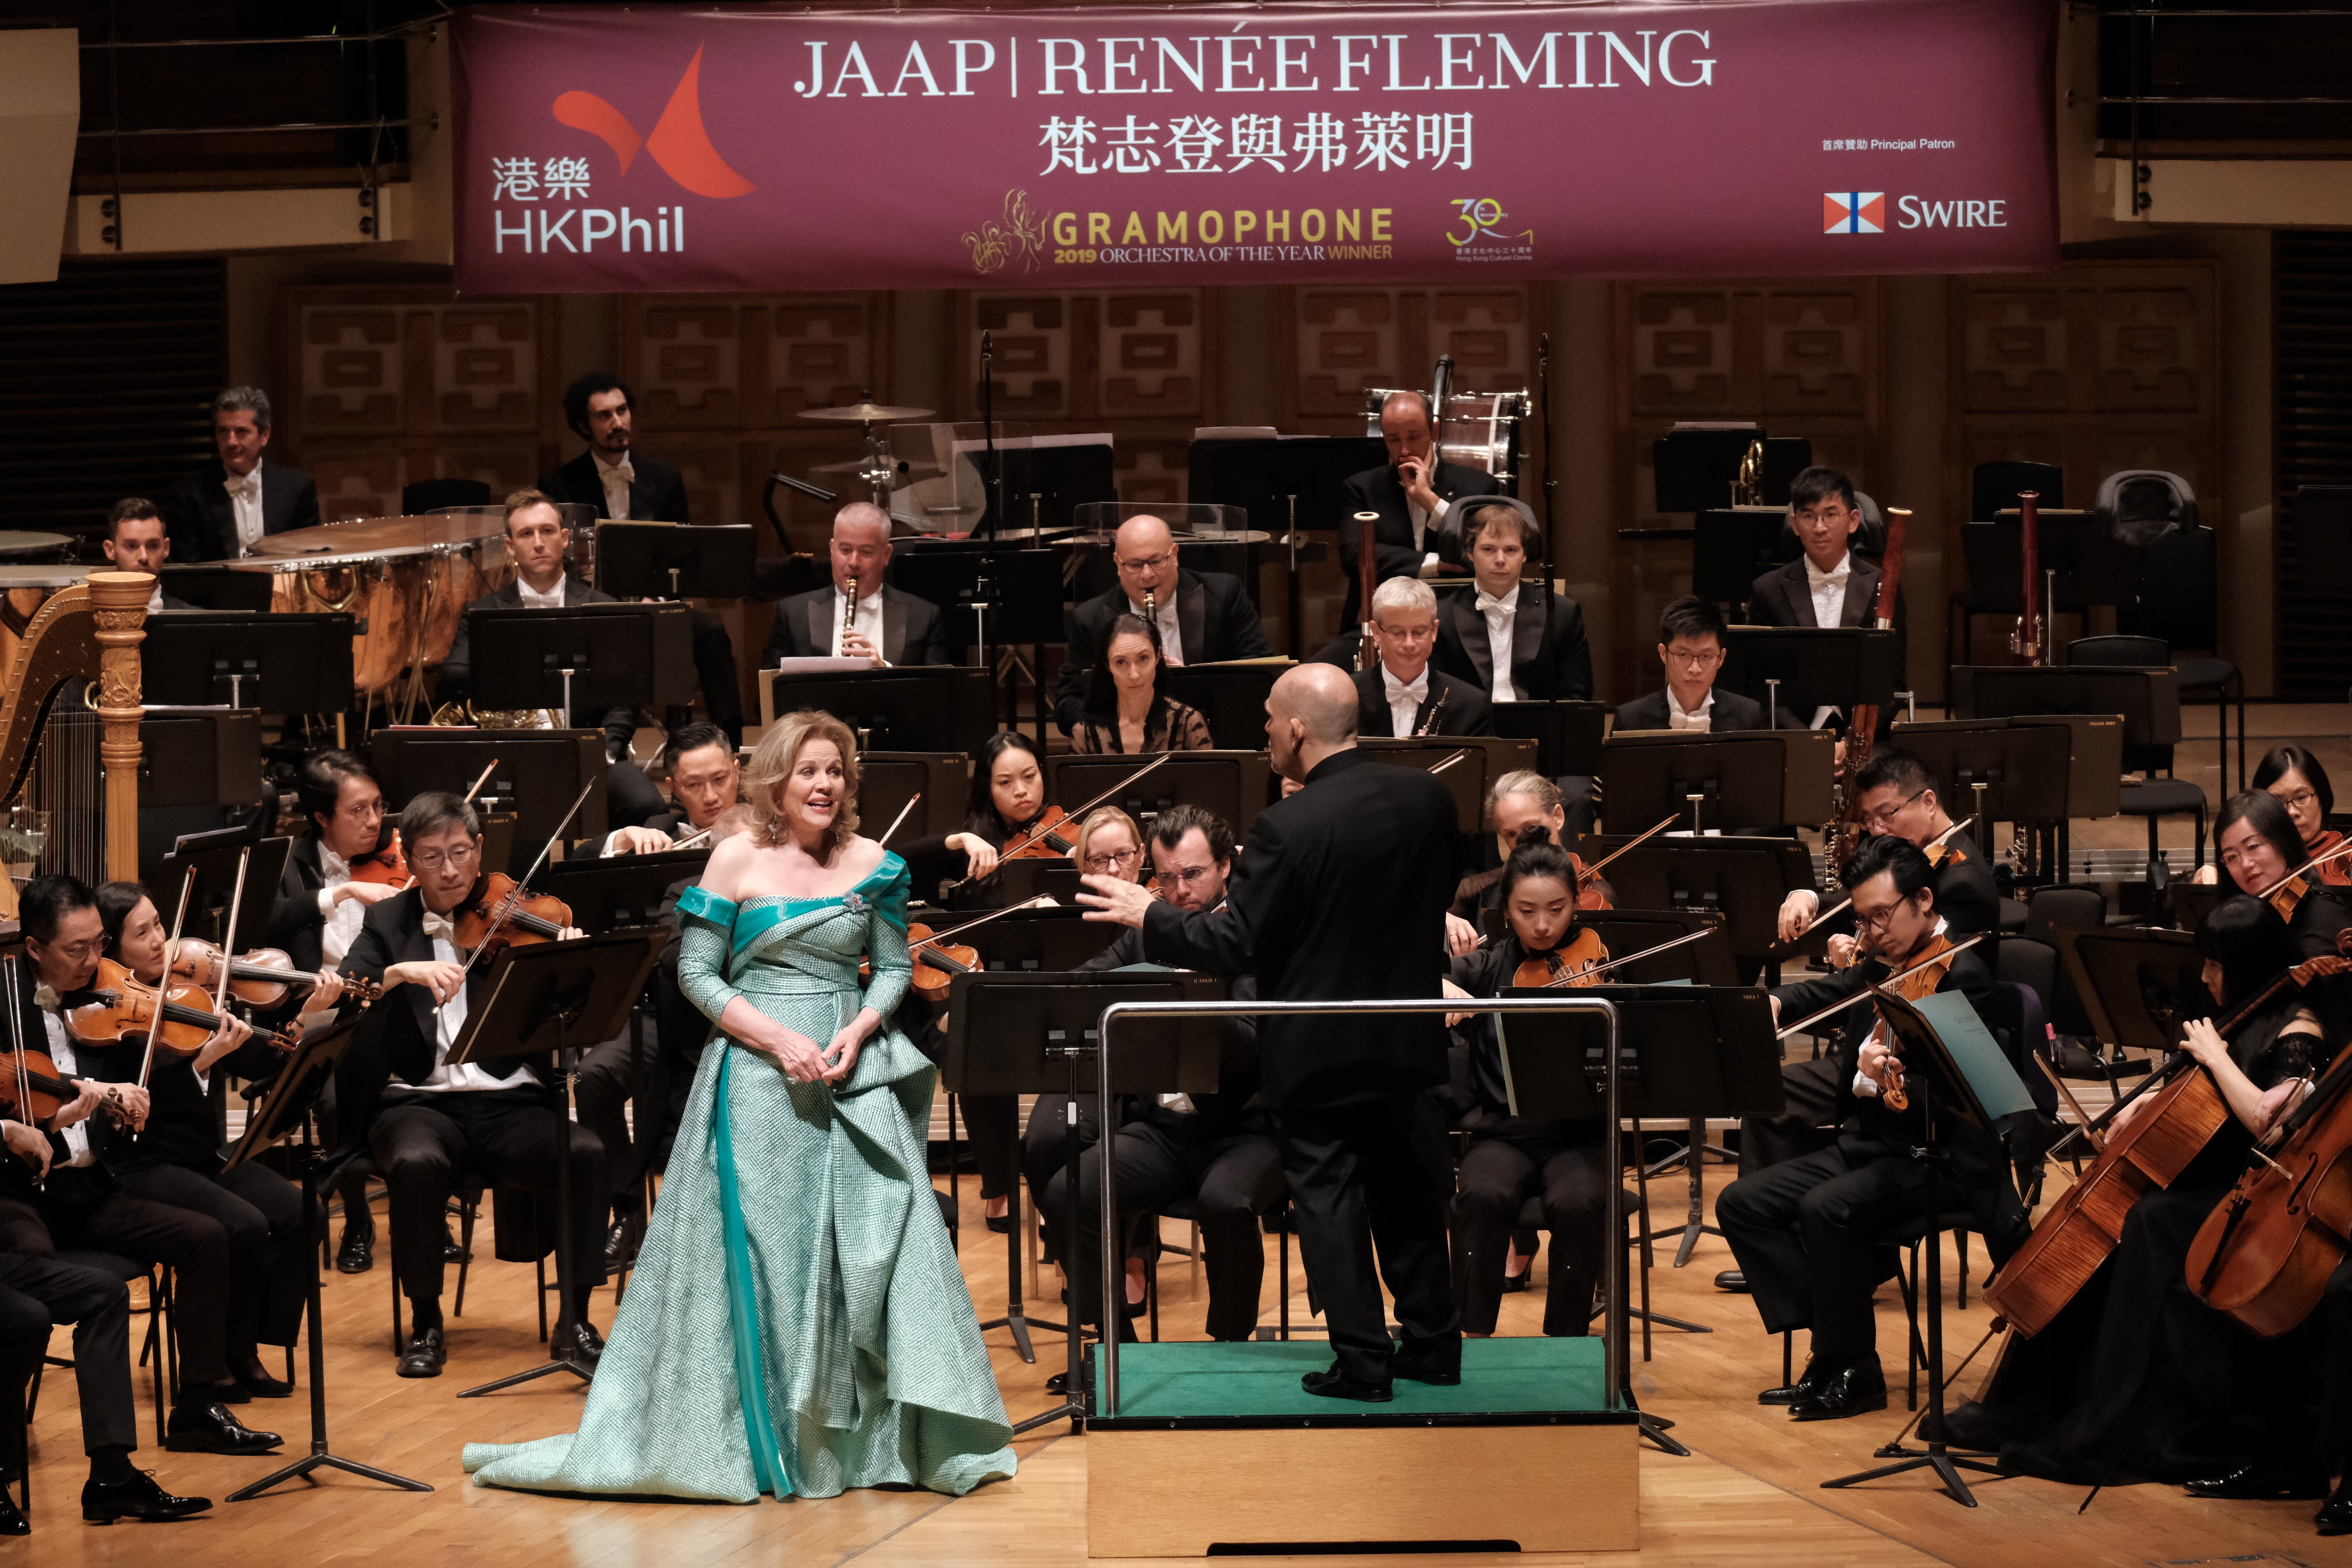 American soprano Renée Fleming performs with the Hong Kong Philharmonic Orchestra under music director Jaap van Zweden at the Hong Kong Cultural Centre Concert Hall on November 8. Photo: Ka Lam/Hong Kong Philharmonic Orchestra